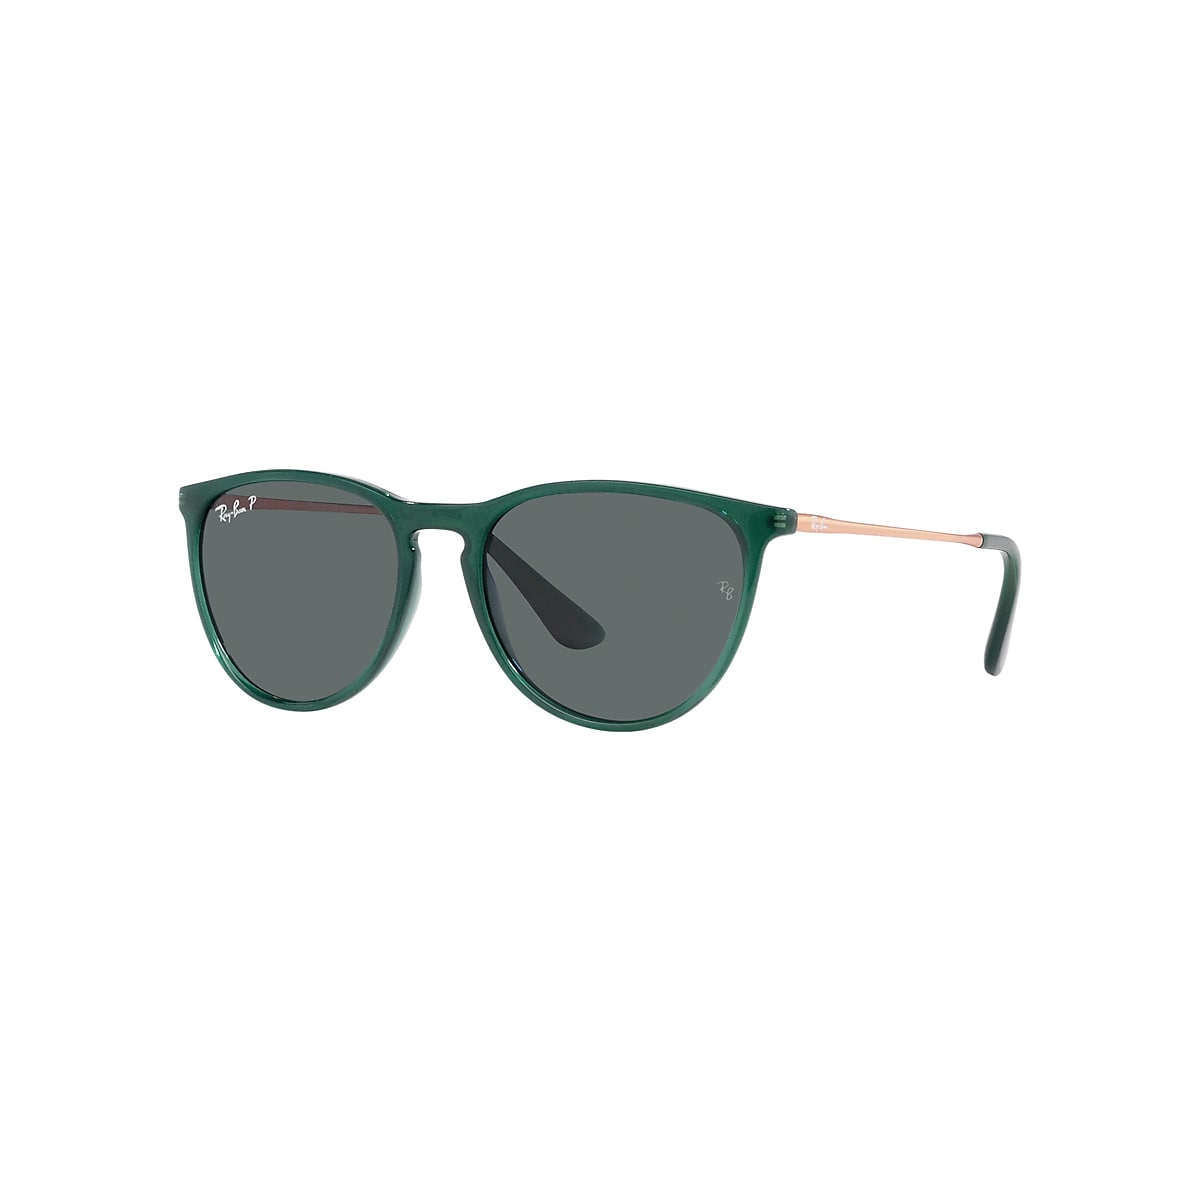 ERIKA KIDS Sunglasses in Opal Green and Dark Grey - RB9060S 